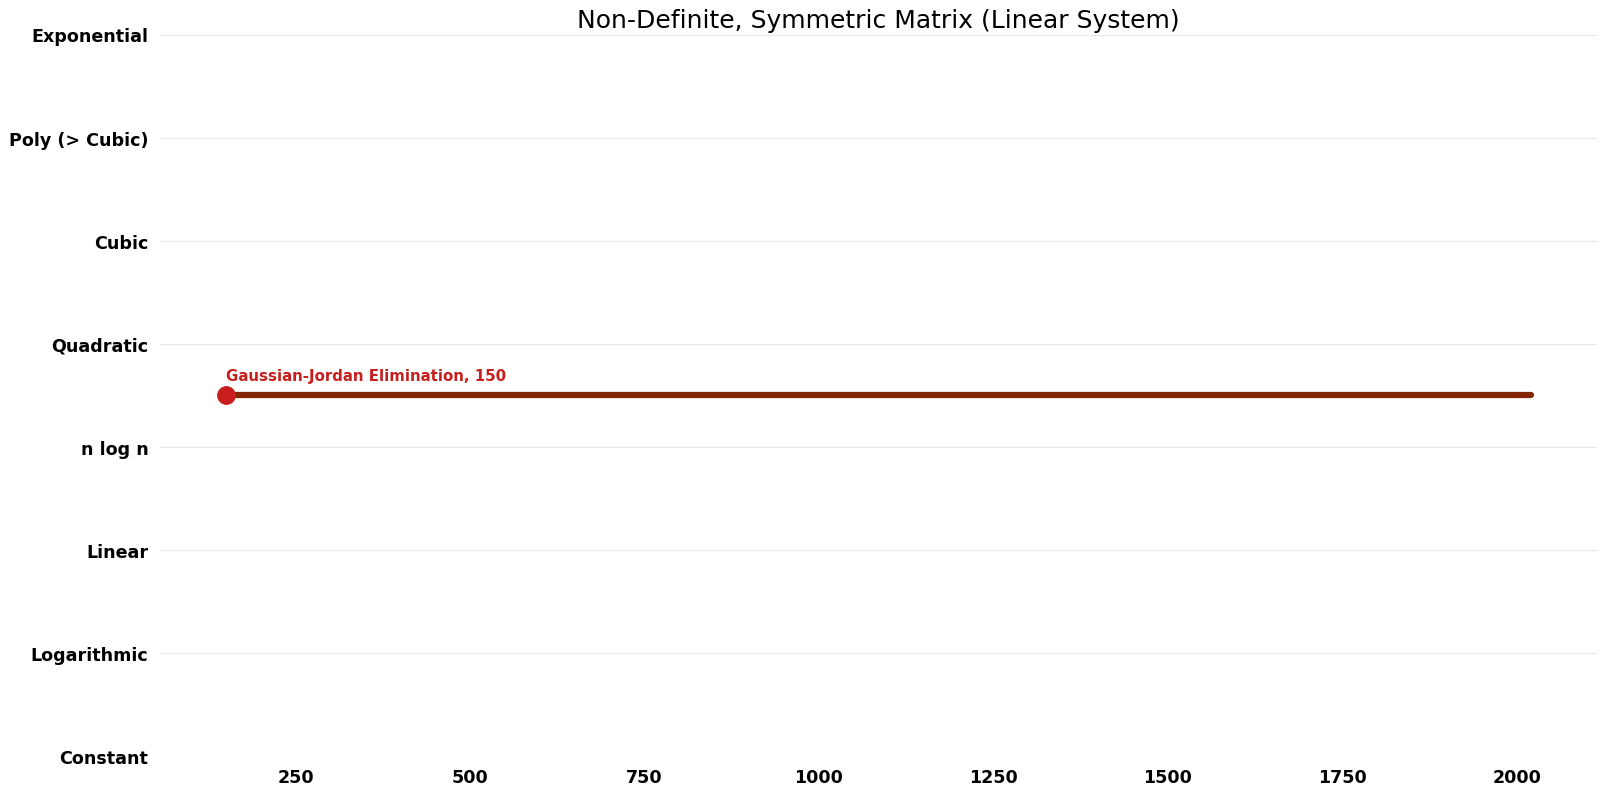 Linear System - Non-Definite, Symmetric Matrix - Time.png